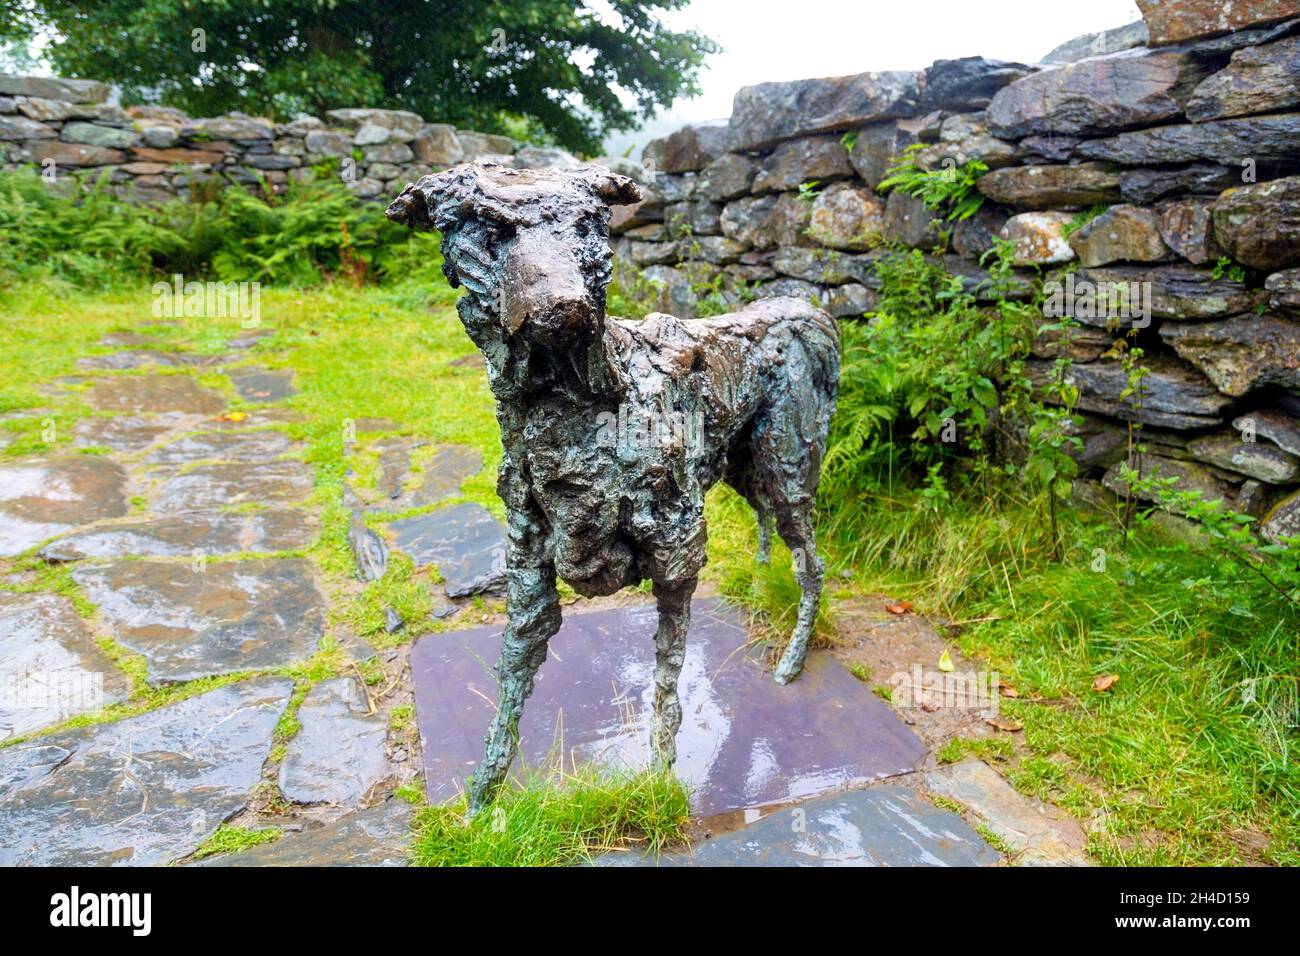 Bronze sculpture of the dog Gelert, placed in a ruined cottage near Gelert's Grave, Beddgelert, Snowdonia National Park, Gwynedd, Wales, UK Stock Photo